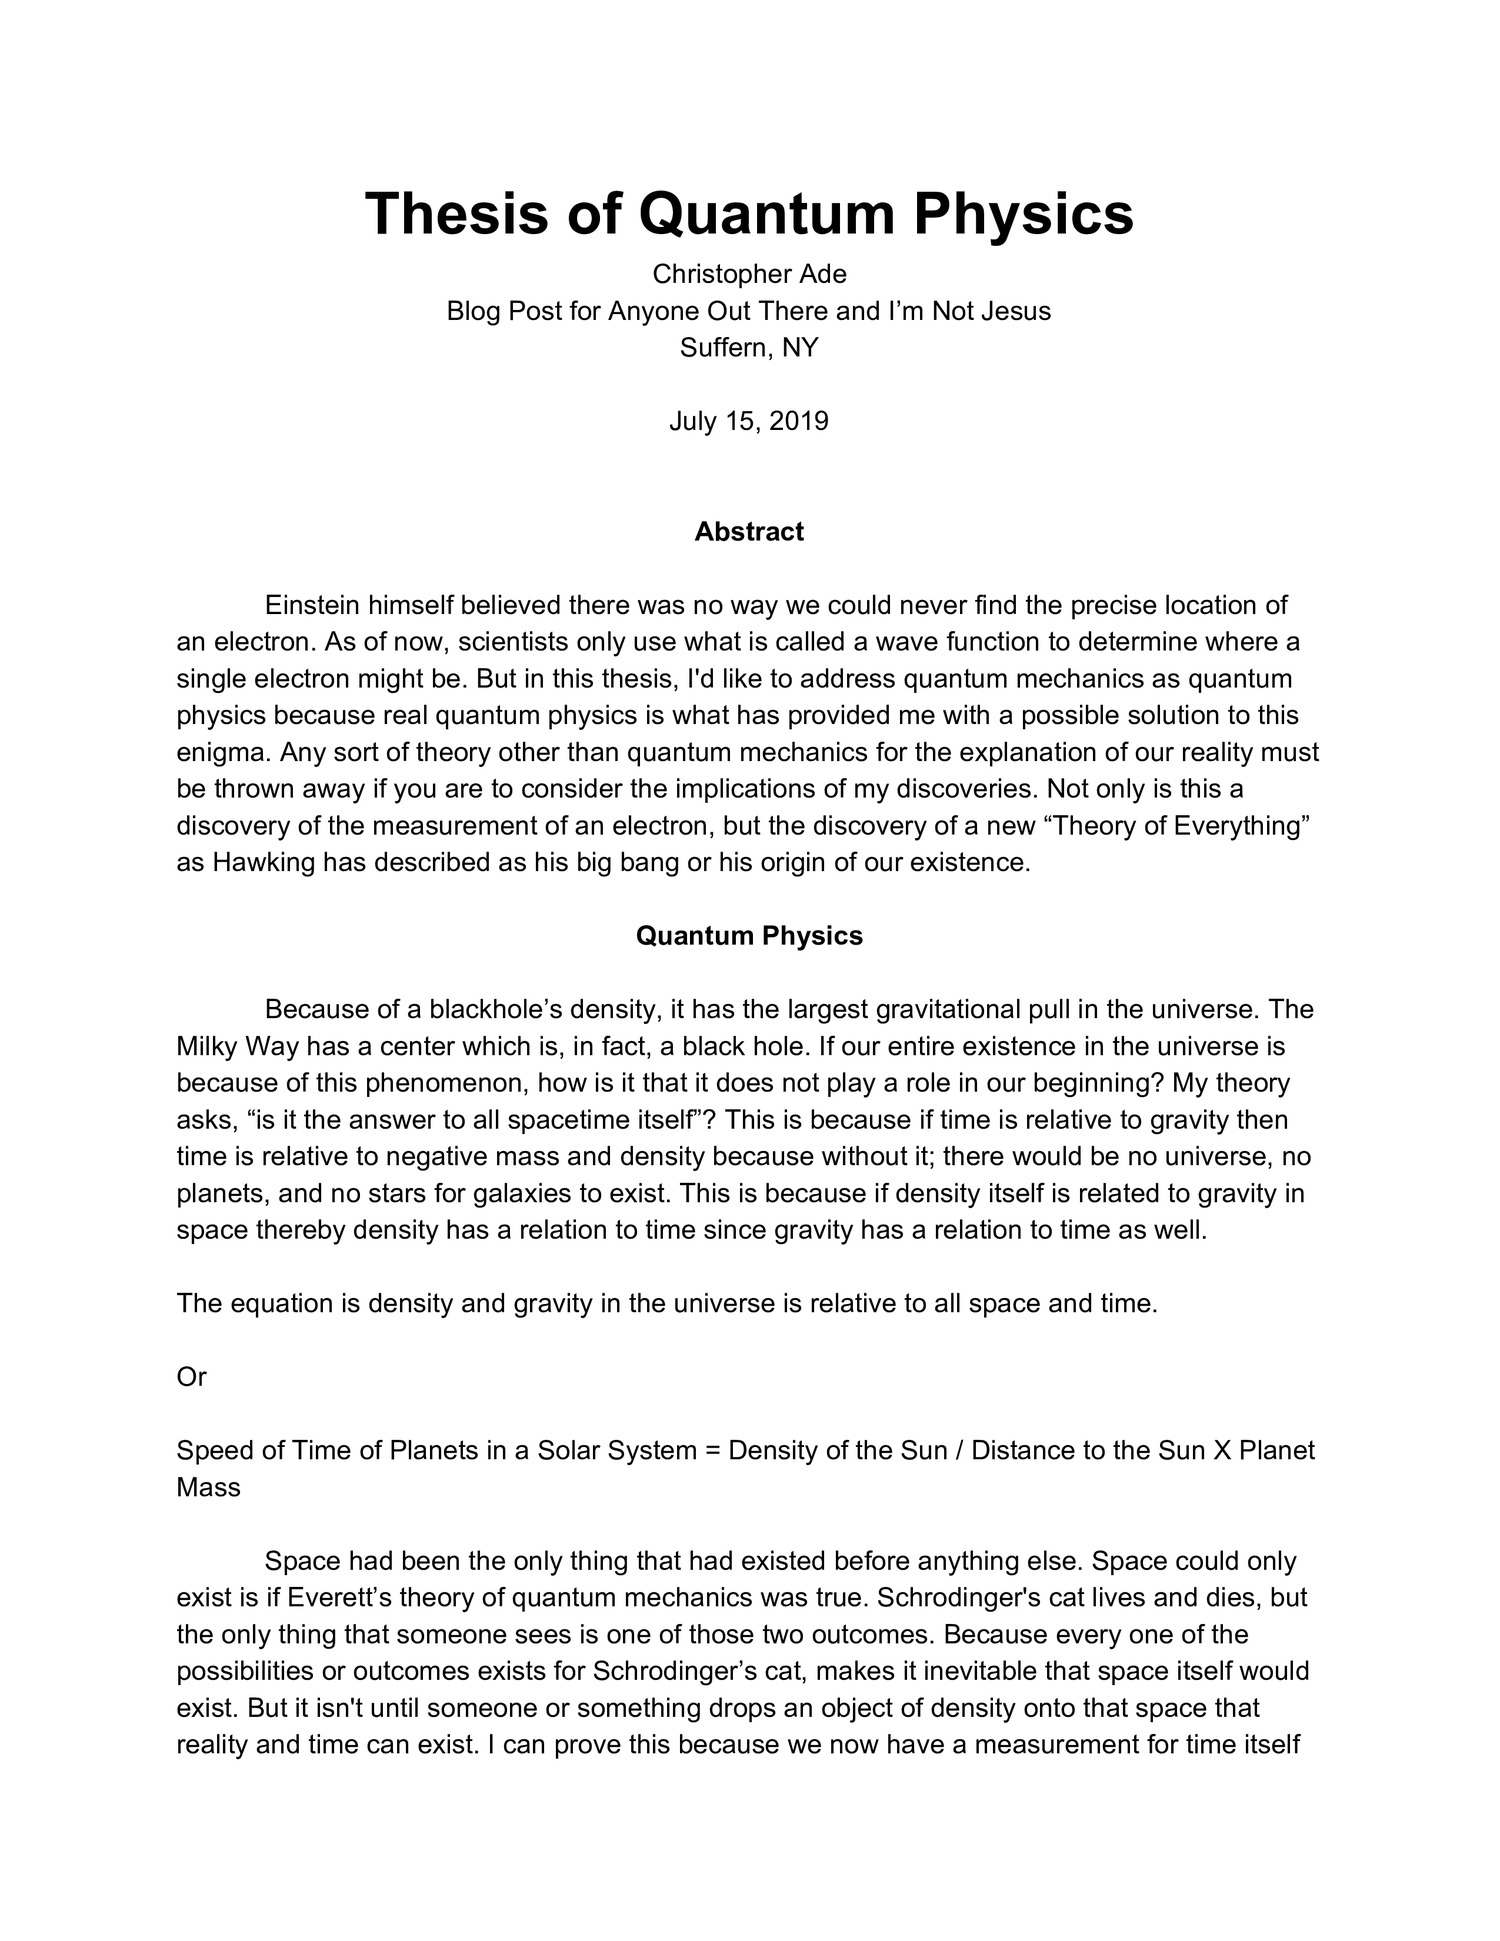 physics dissertation